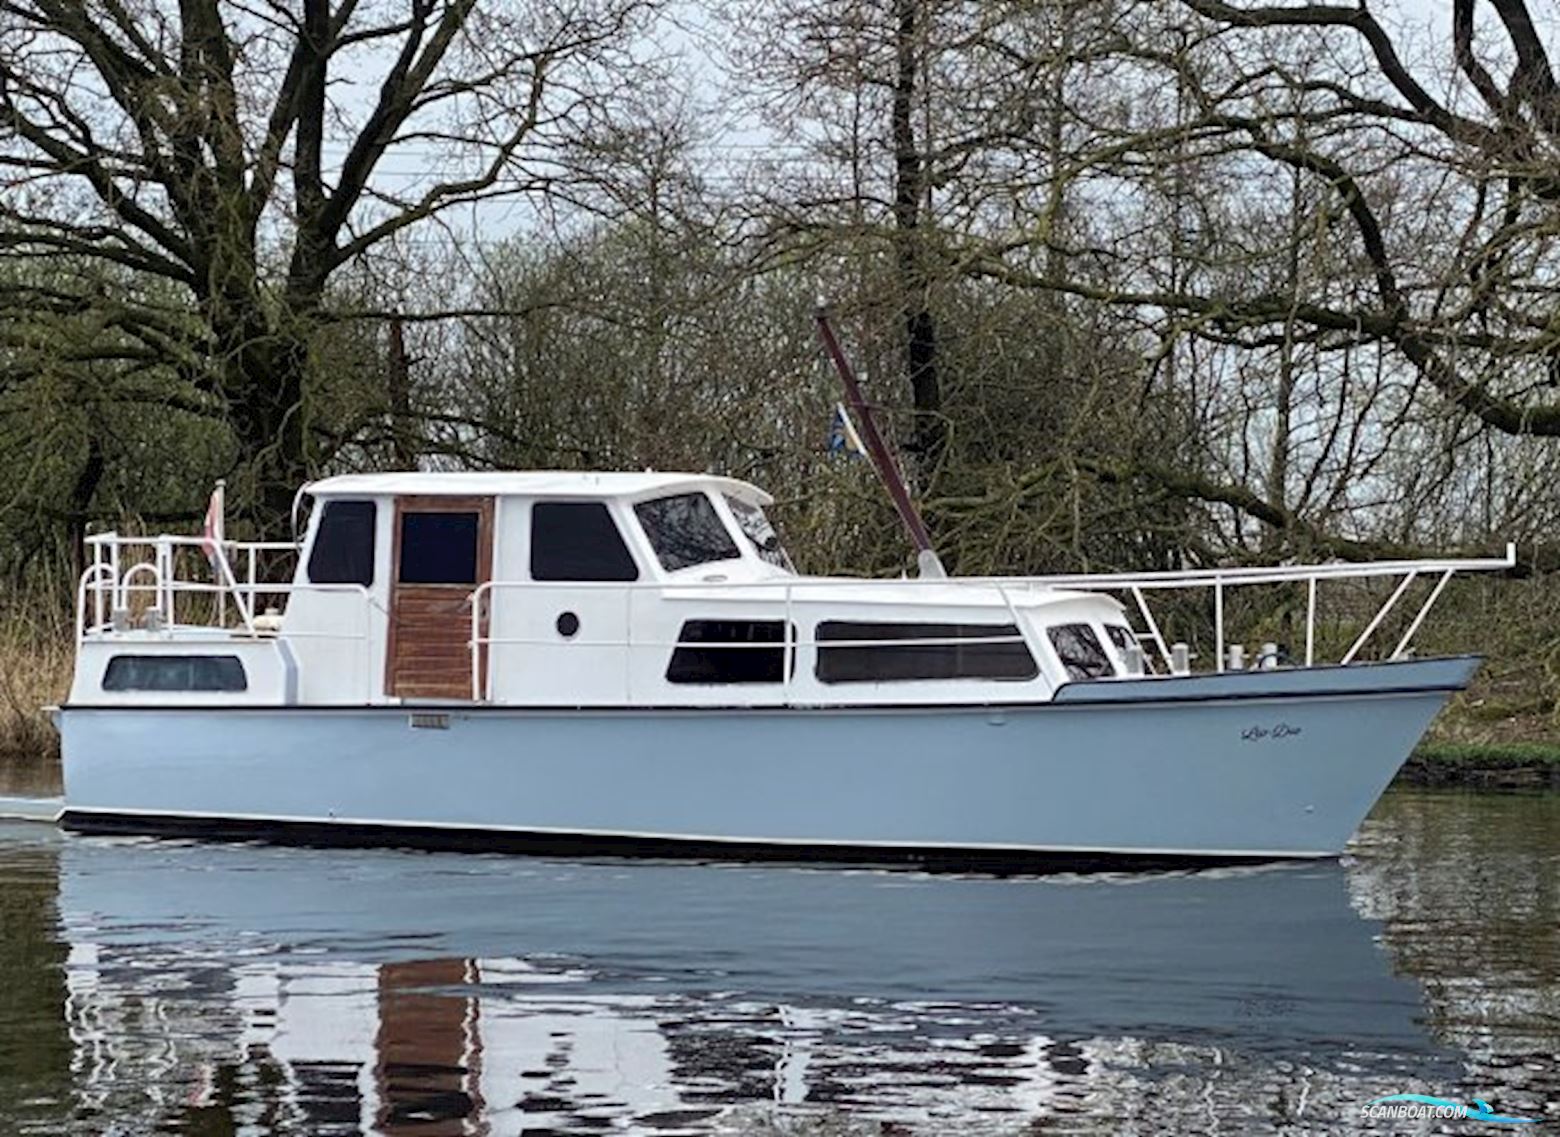 Ten Broeke 900 Motor boat 1980, with Motor Service 2022 engine, The Netherlands